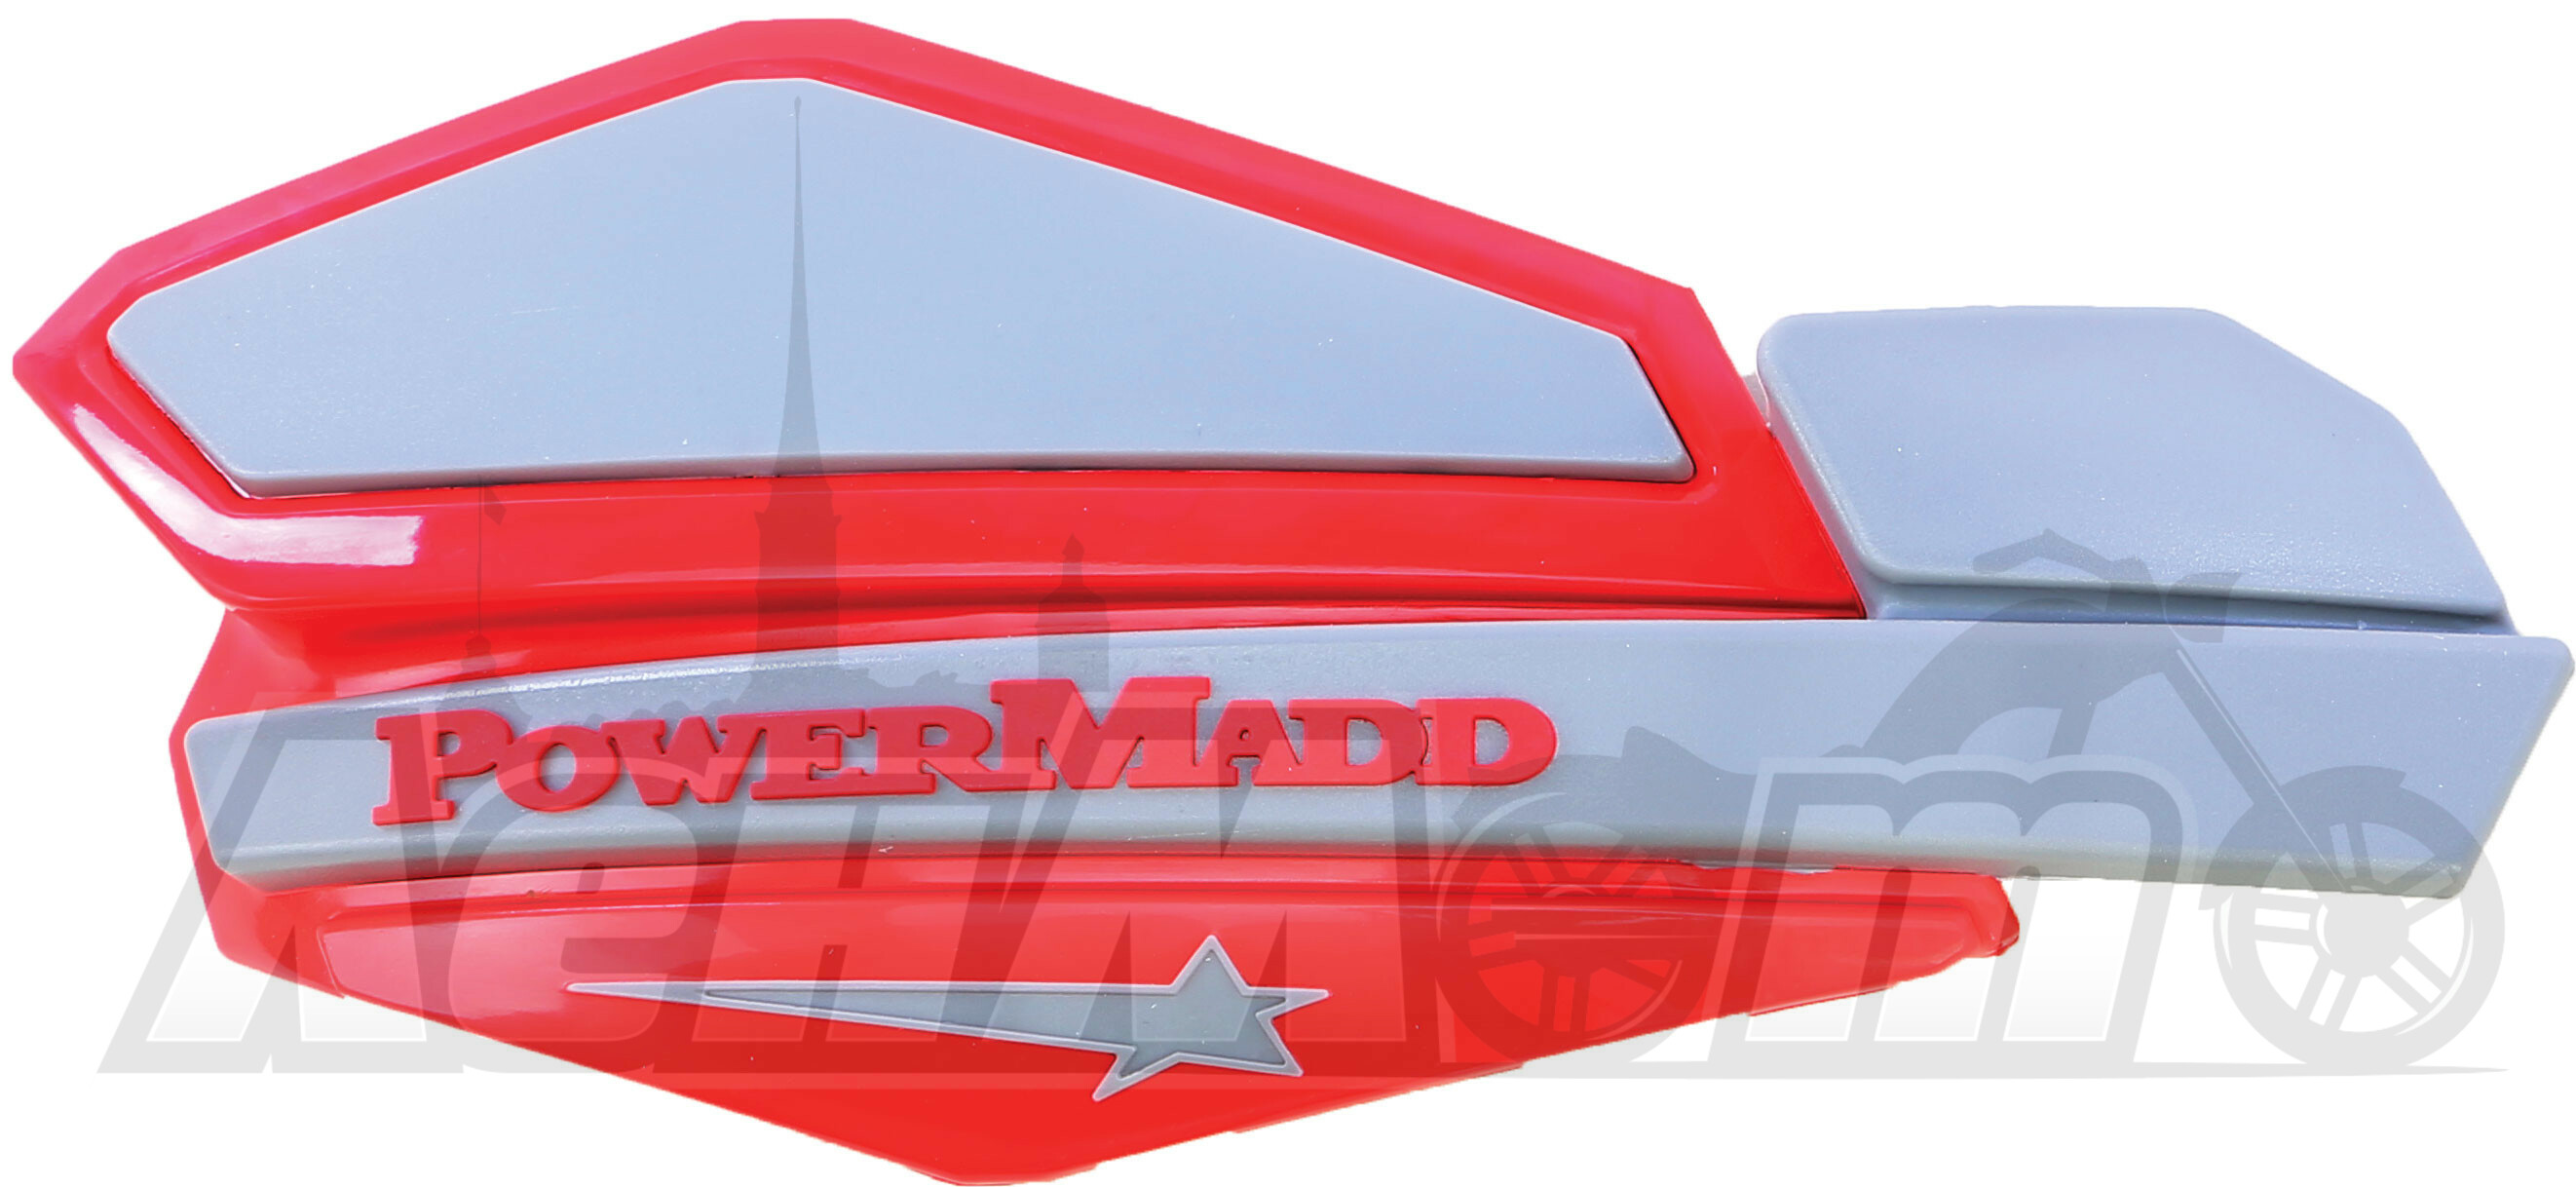 34232 POWERMADD POWERMADD STAR HANDGUARD SYSTEM - RED/SILVER  PD14232 Automatic Distributors купить | POWERMADD STAR защита рук система красный/серебро